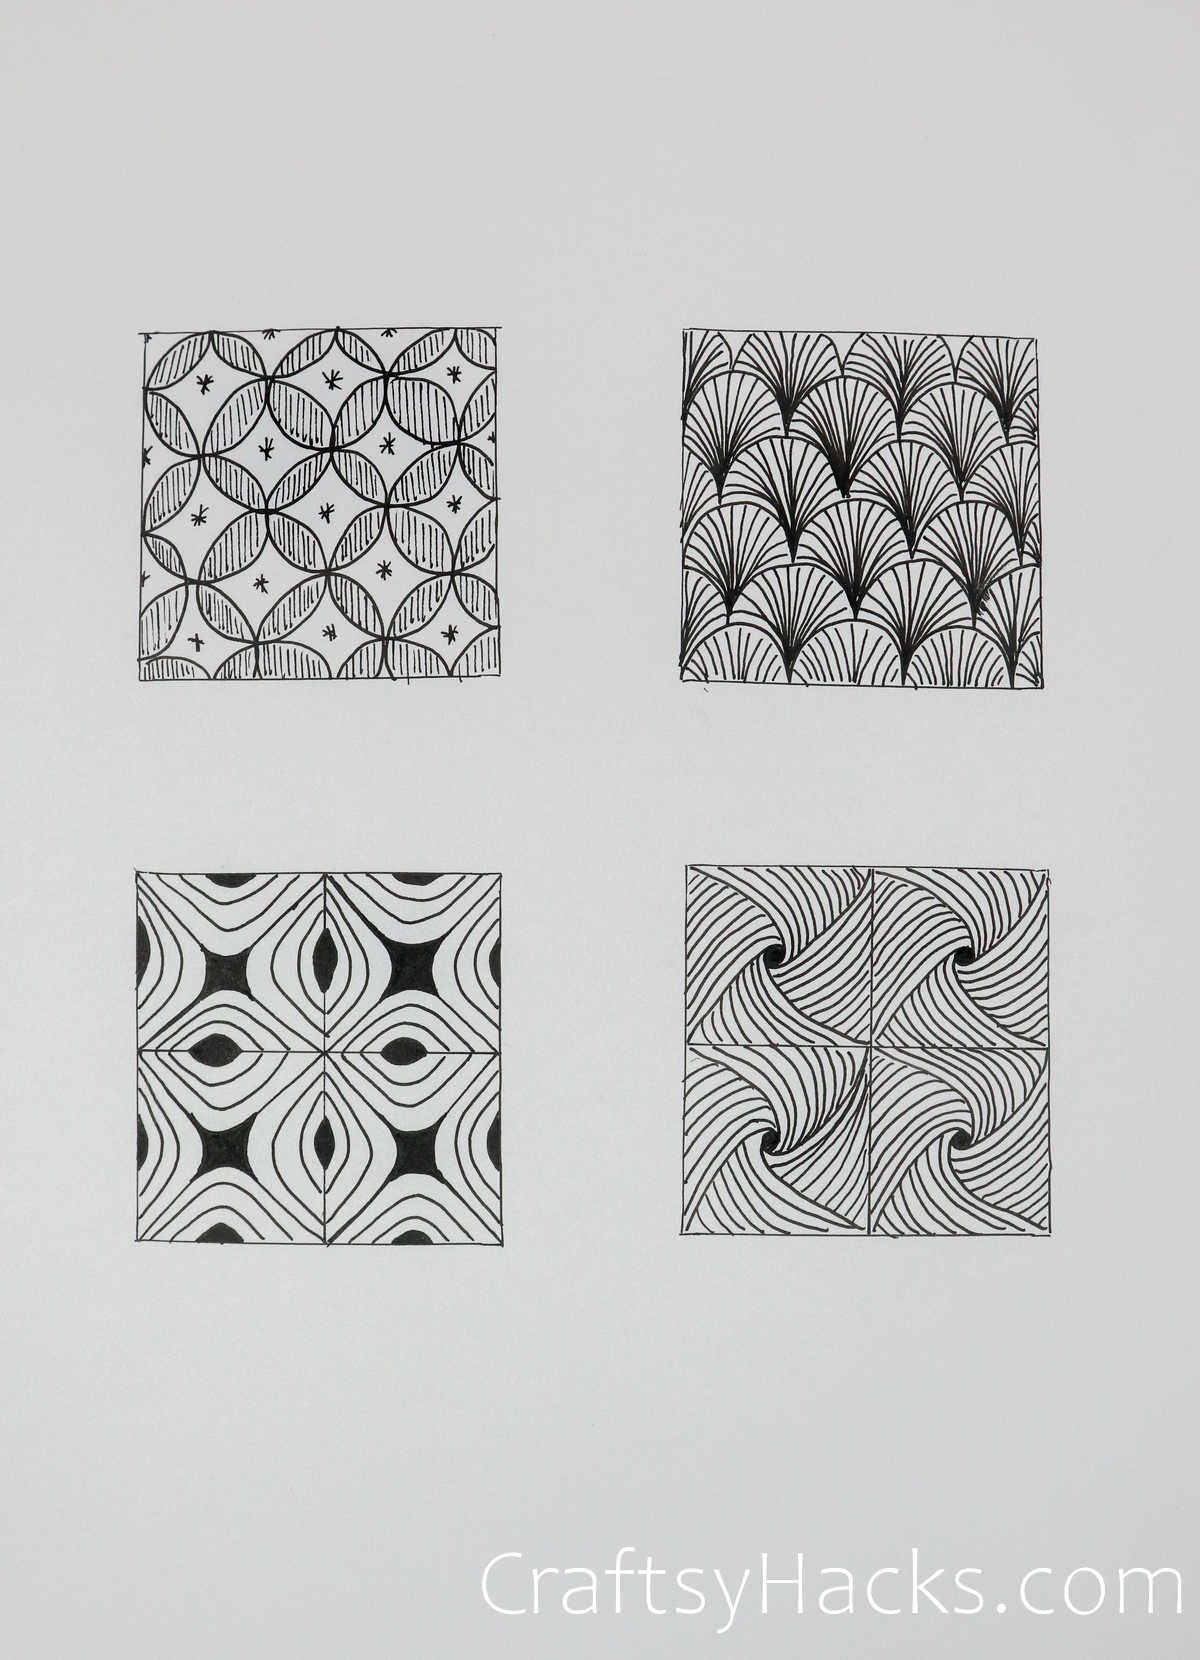 1- 4 patterns